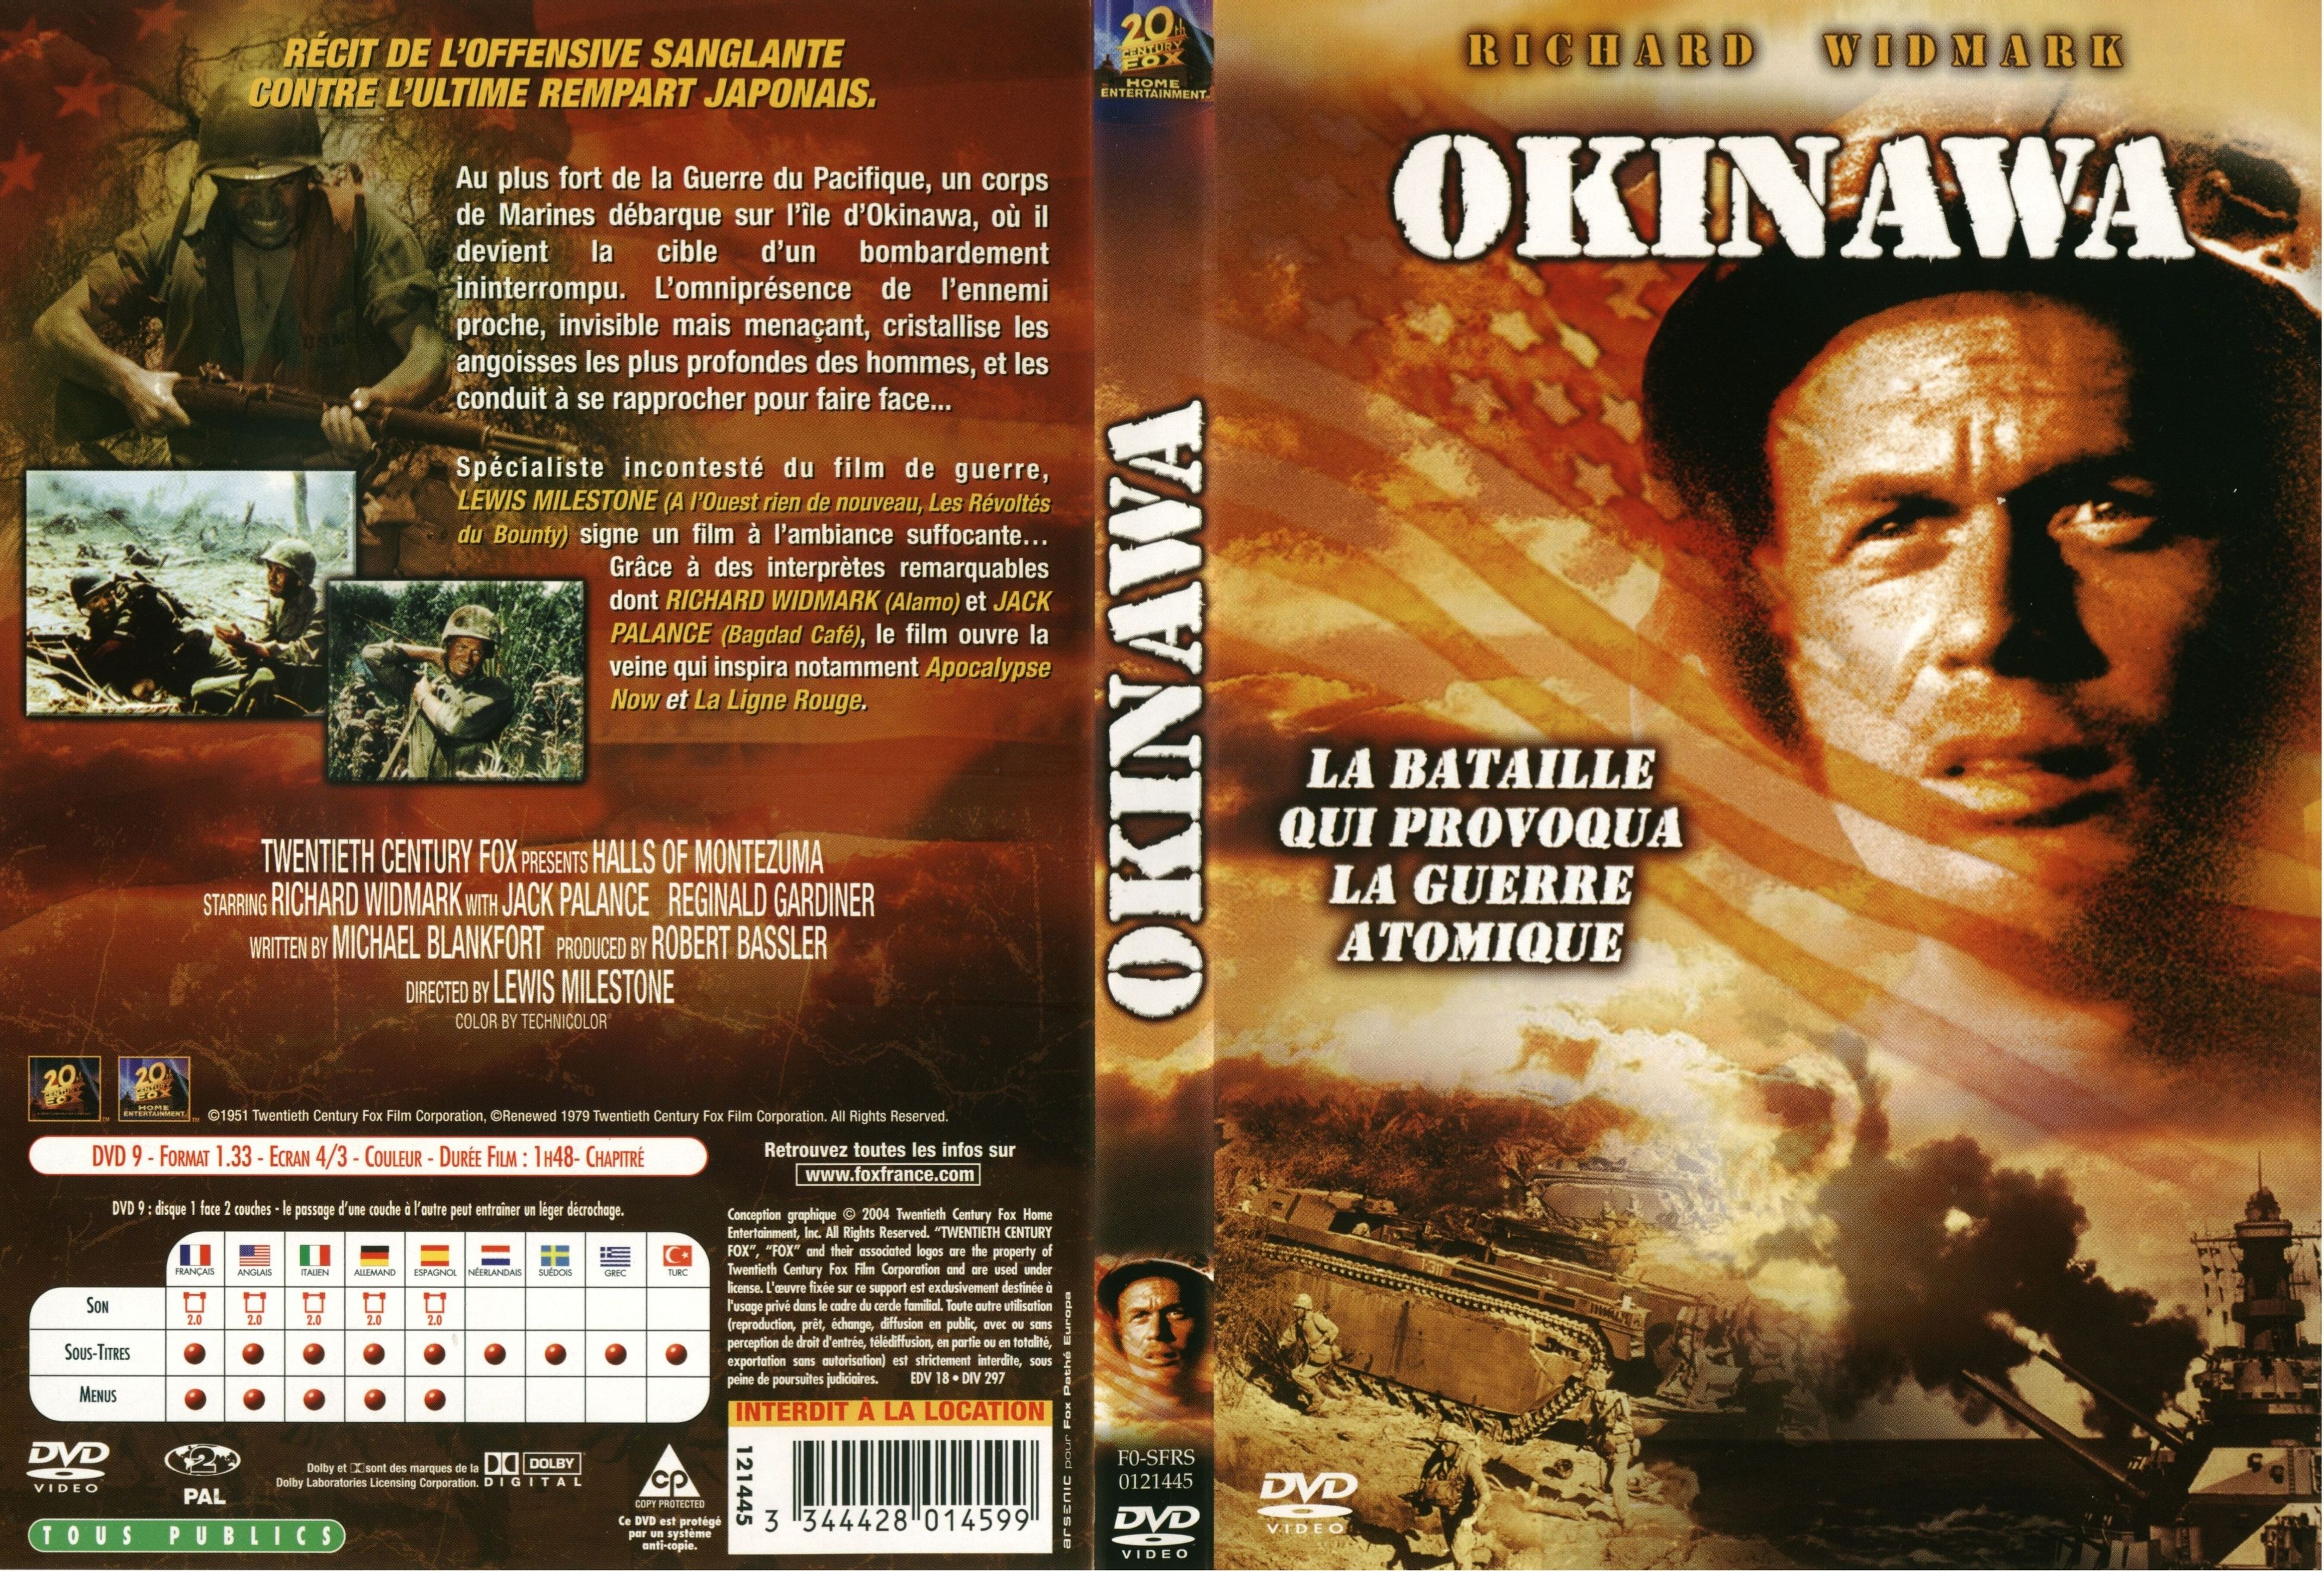 Jaquette DVD Okinawa